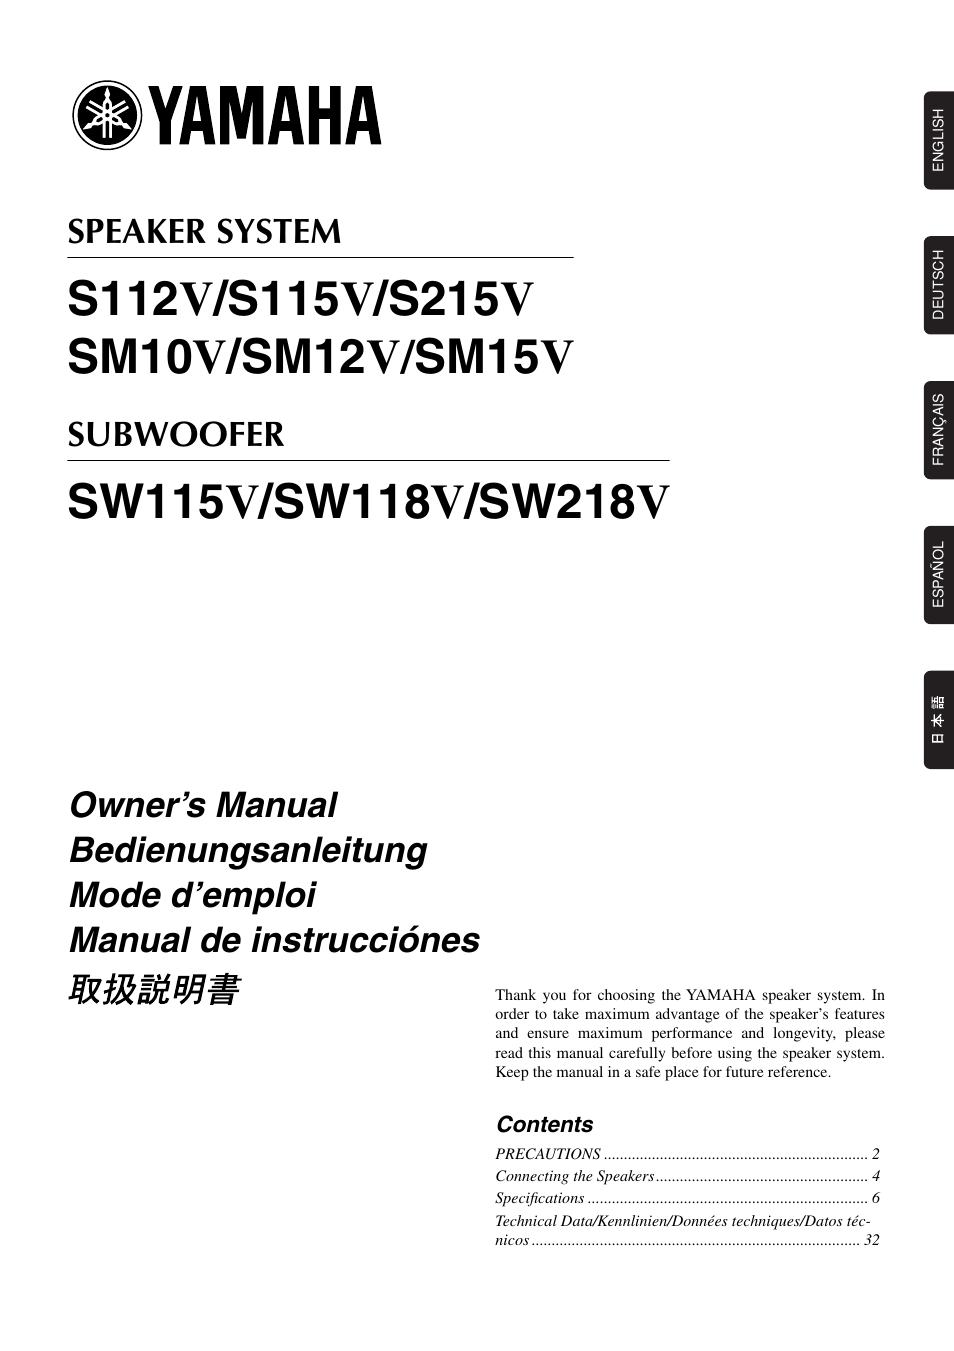 Yamaha SW115V User Manual | 13 pages